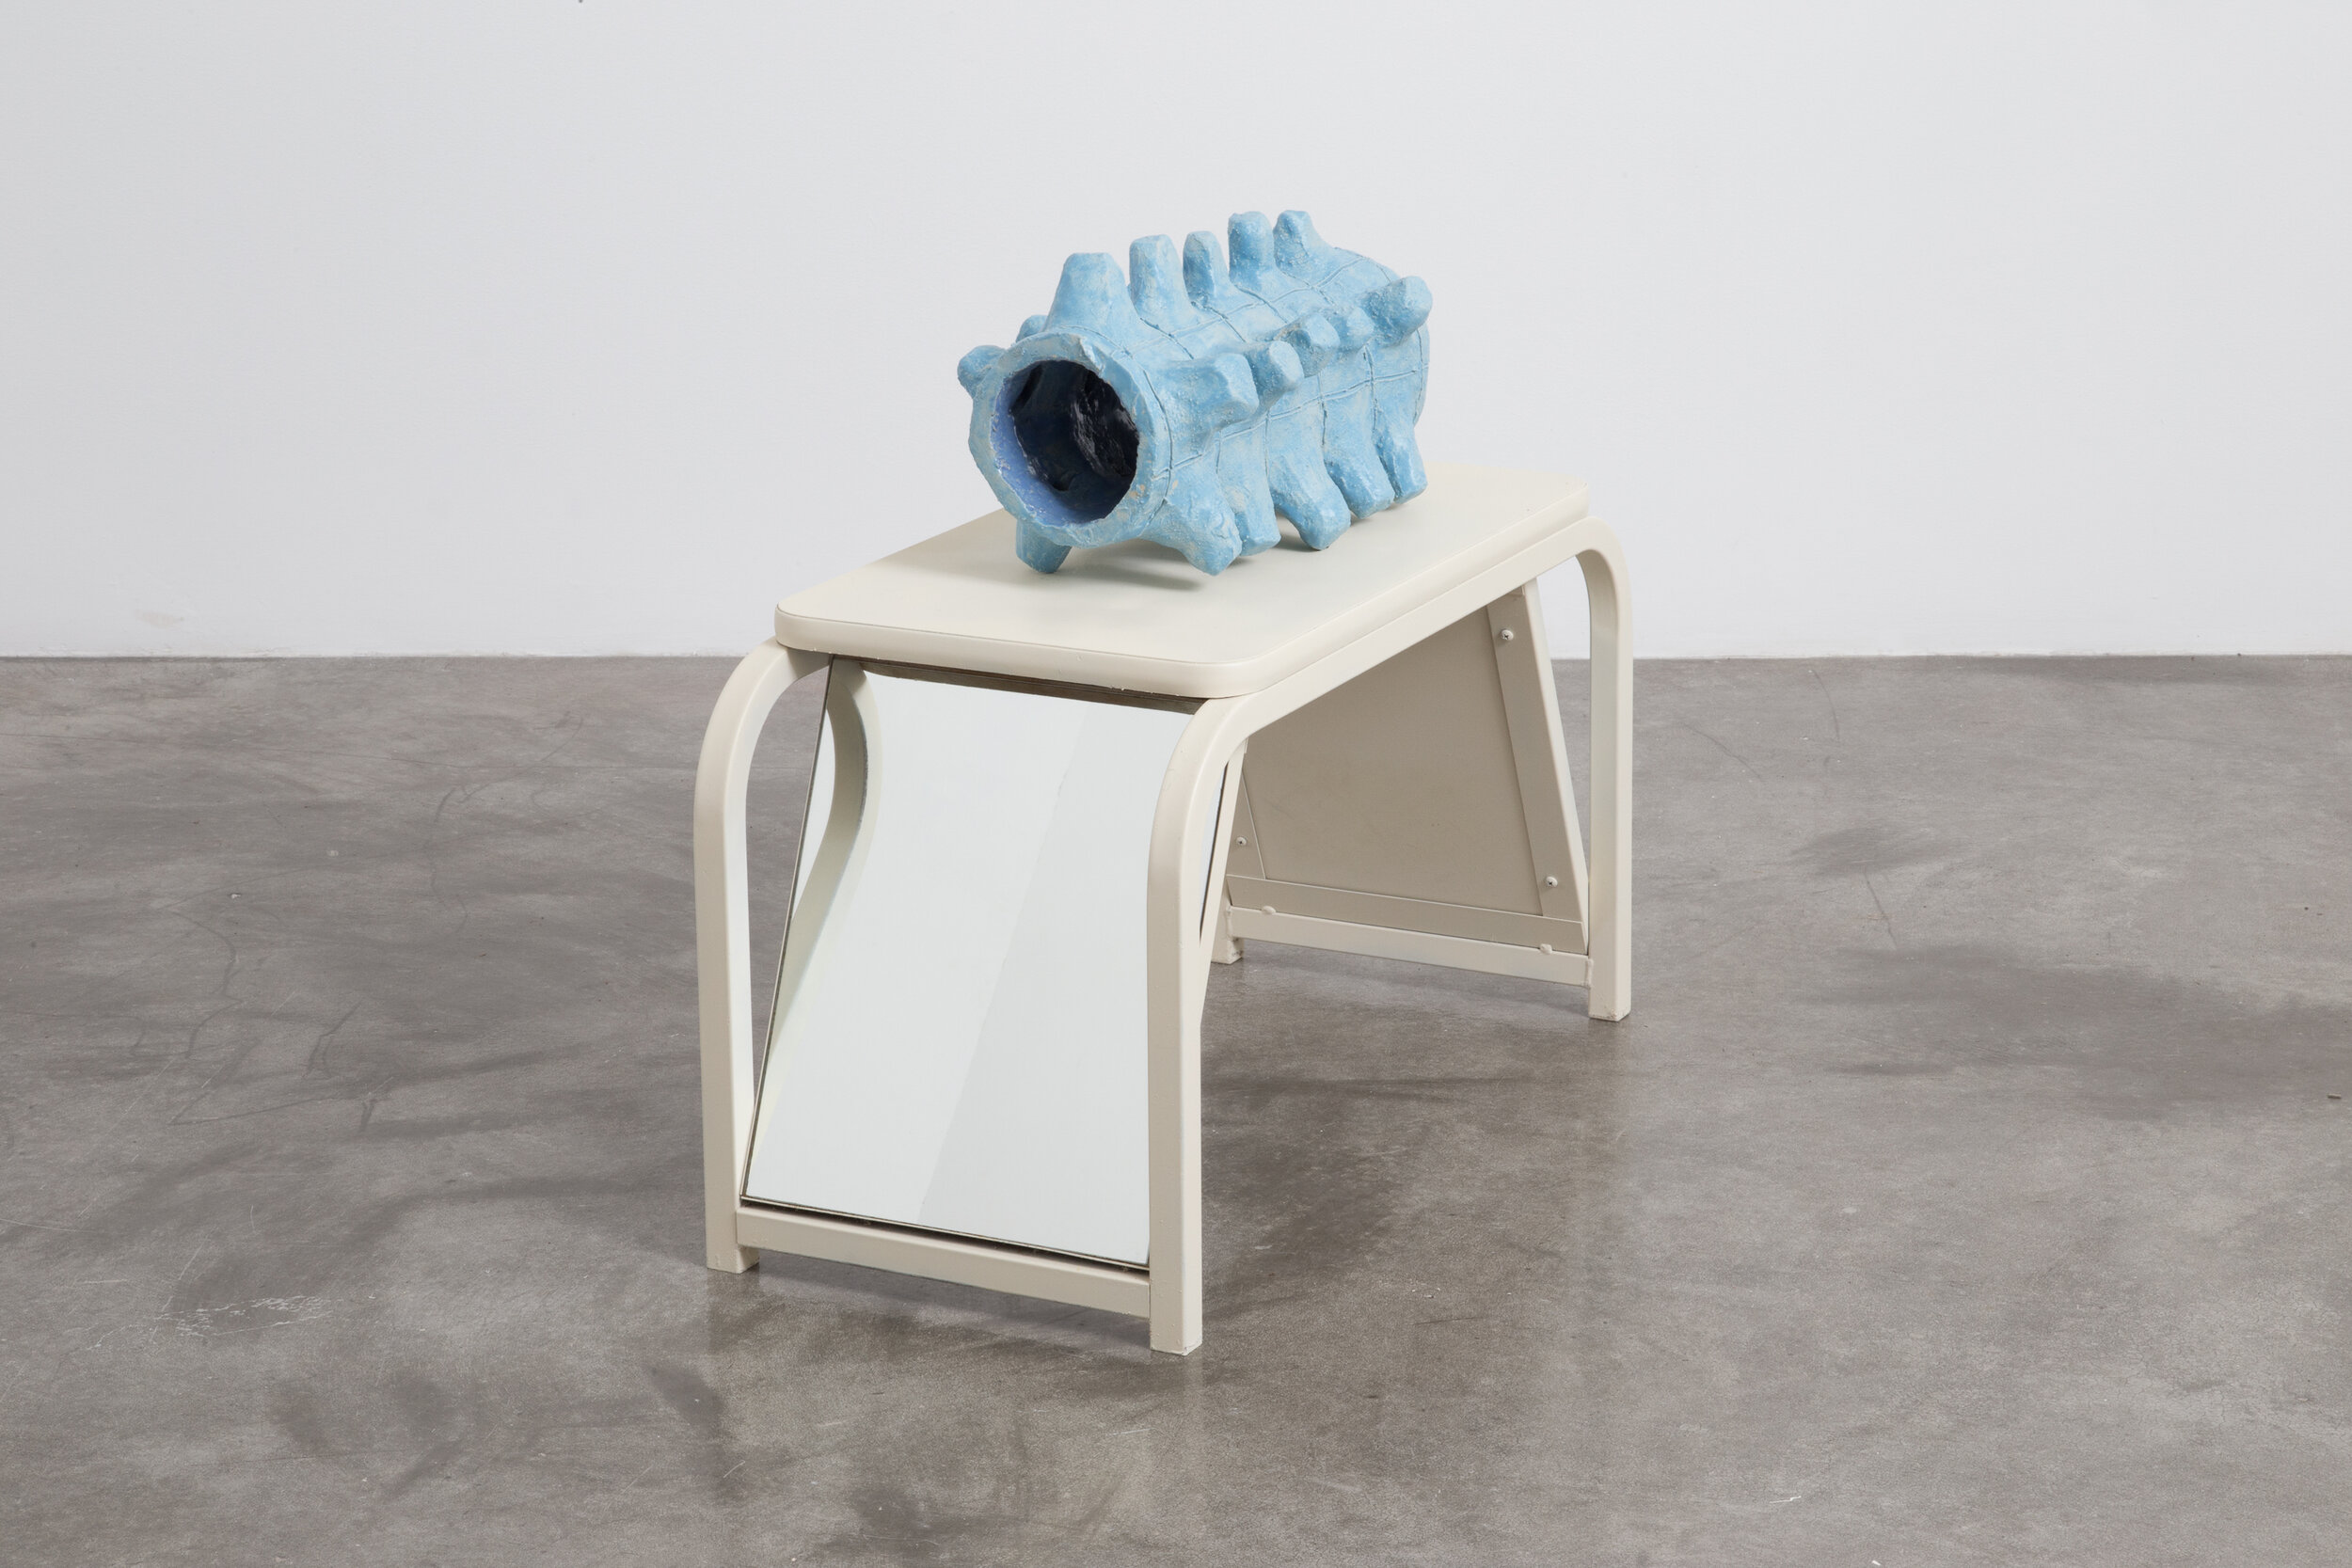  Foam Roller Prototype, 2019, Ceramic, enamel paint, shoe bench, 12&nbsp; x 20 x 20” 